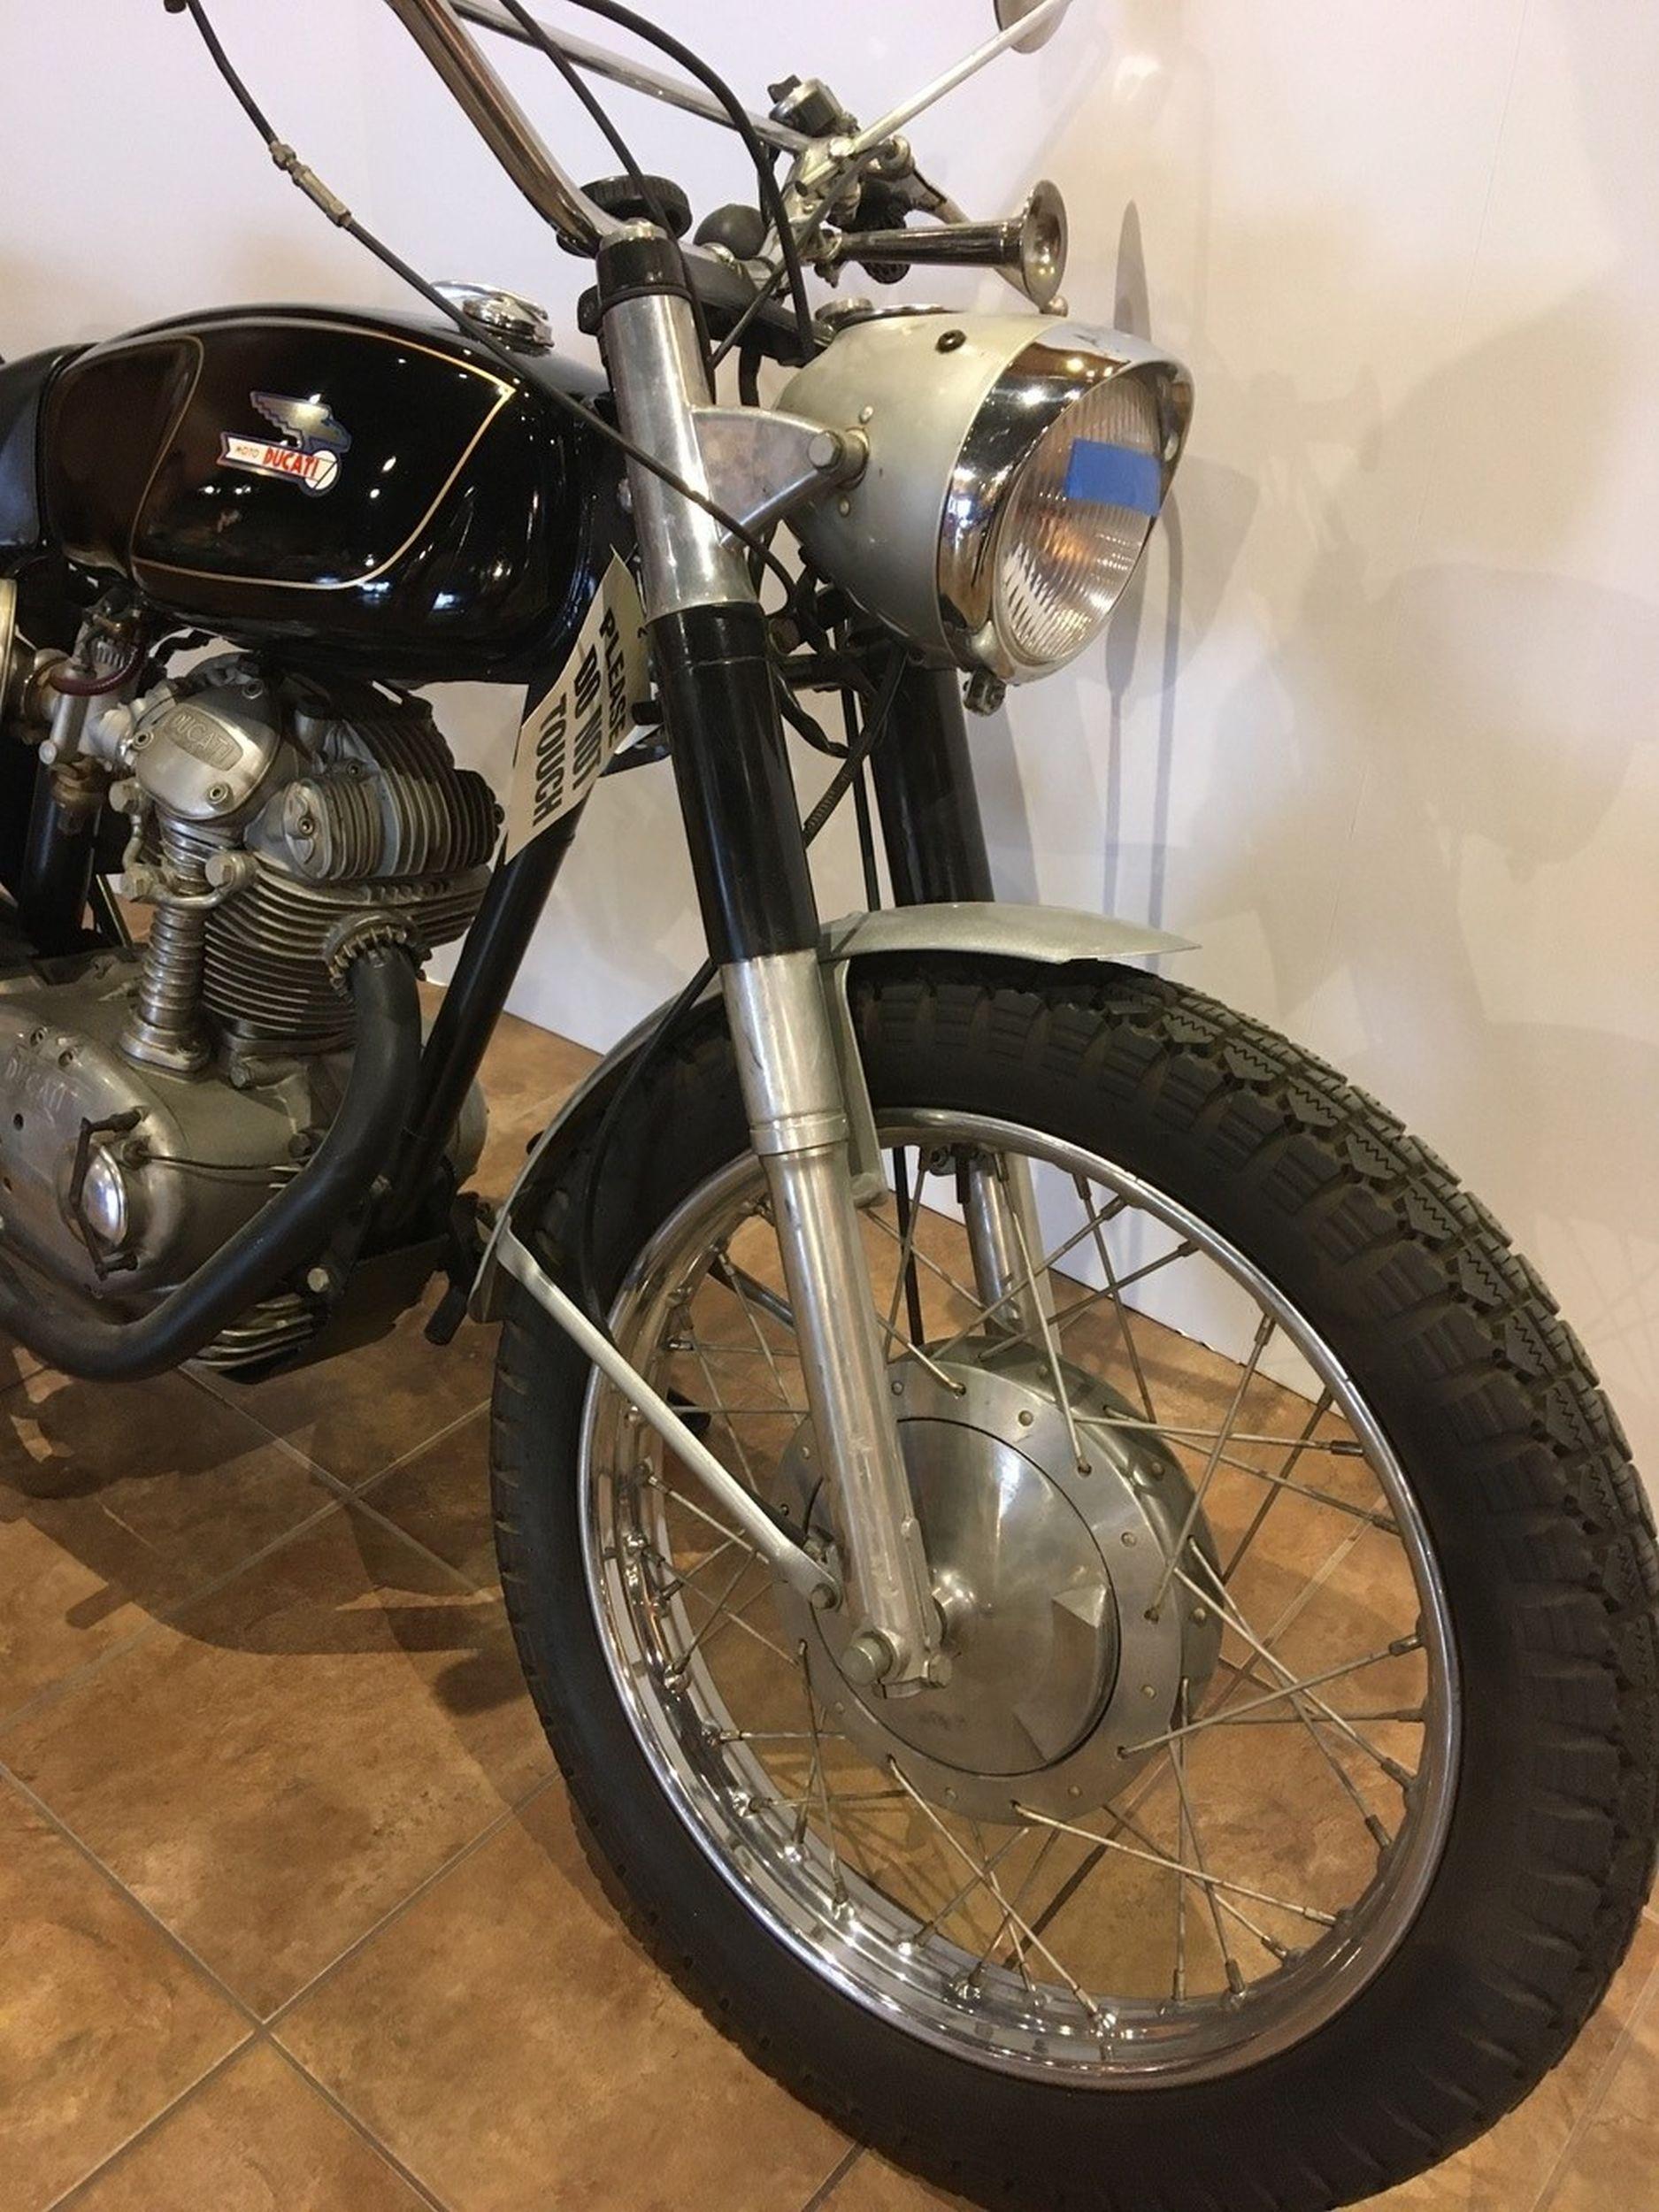 1966 Ducati 250 Scrambler Motorcycle